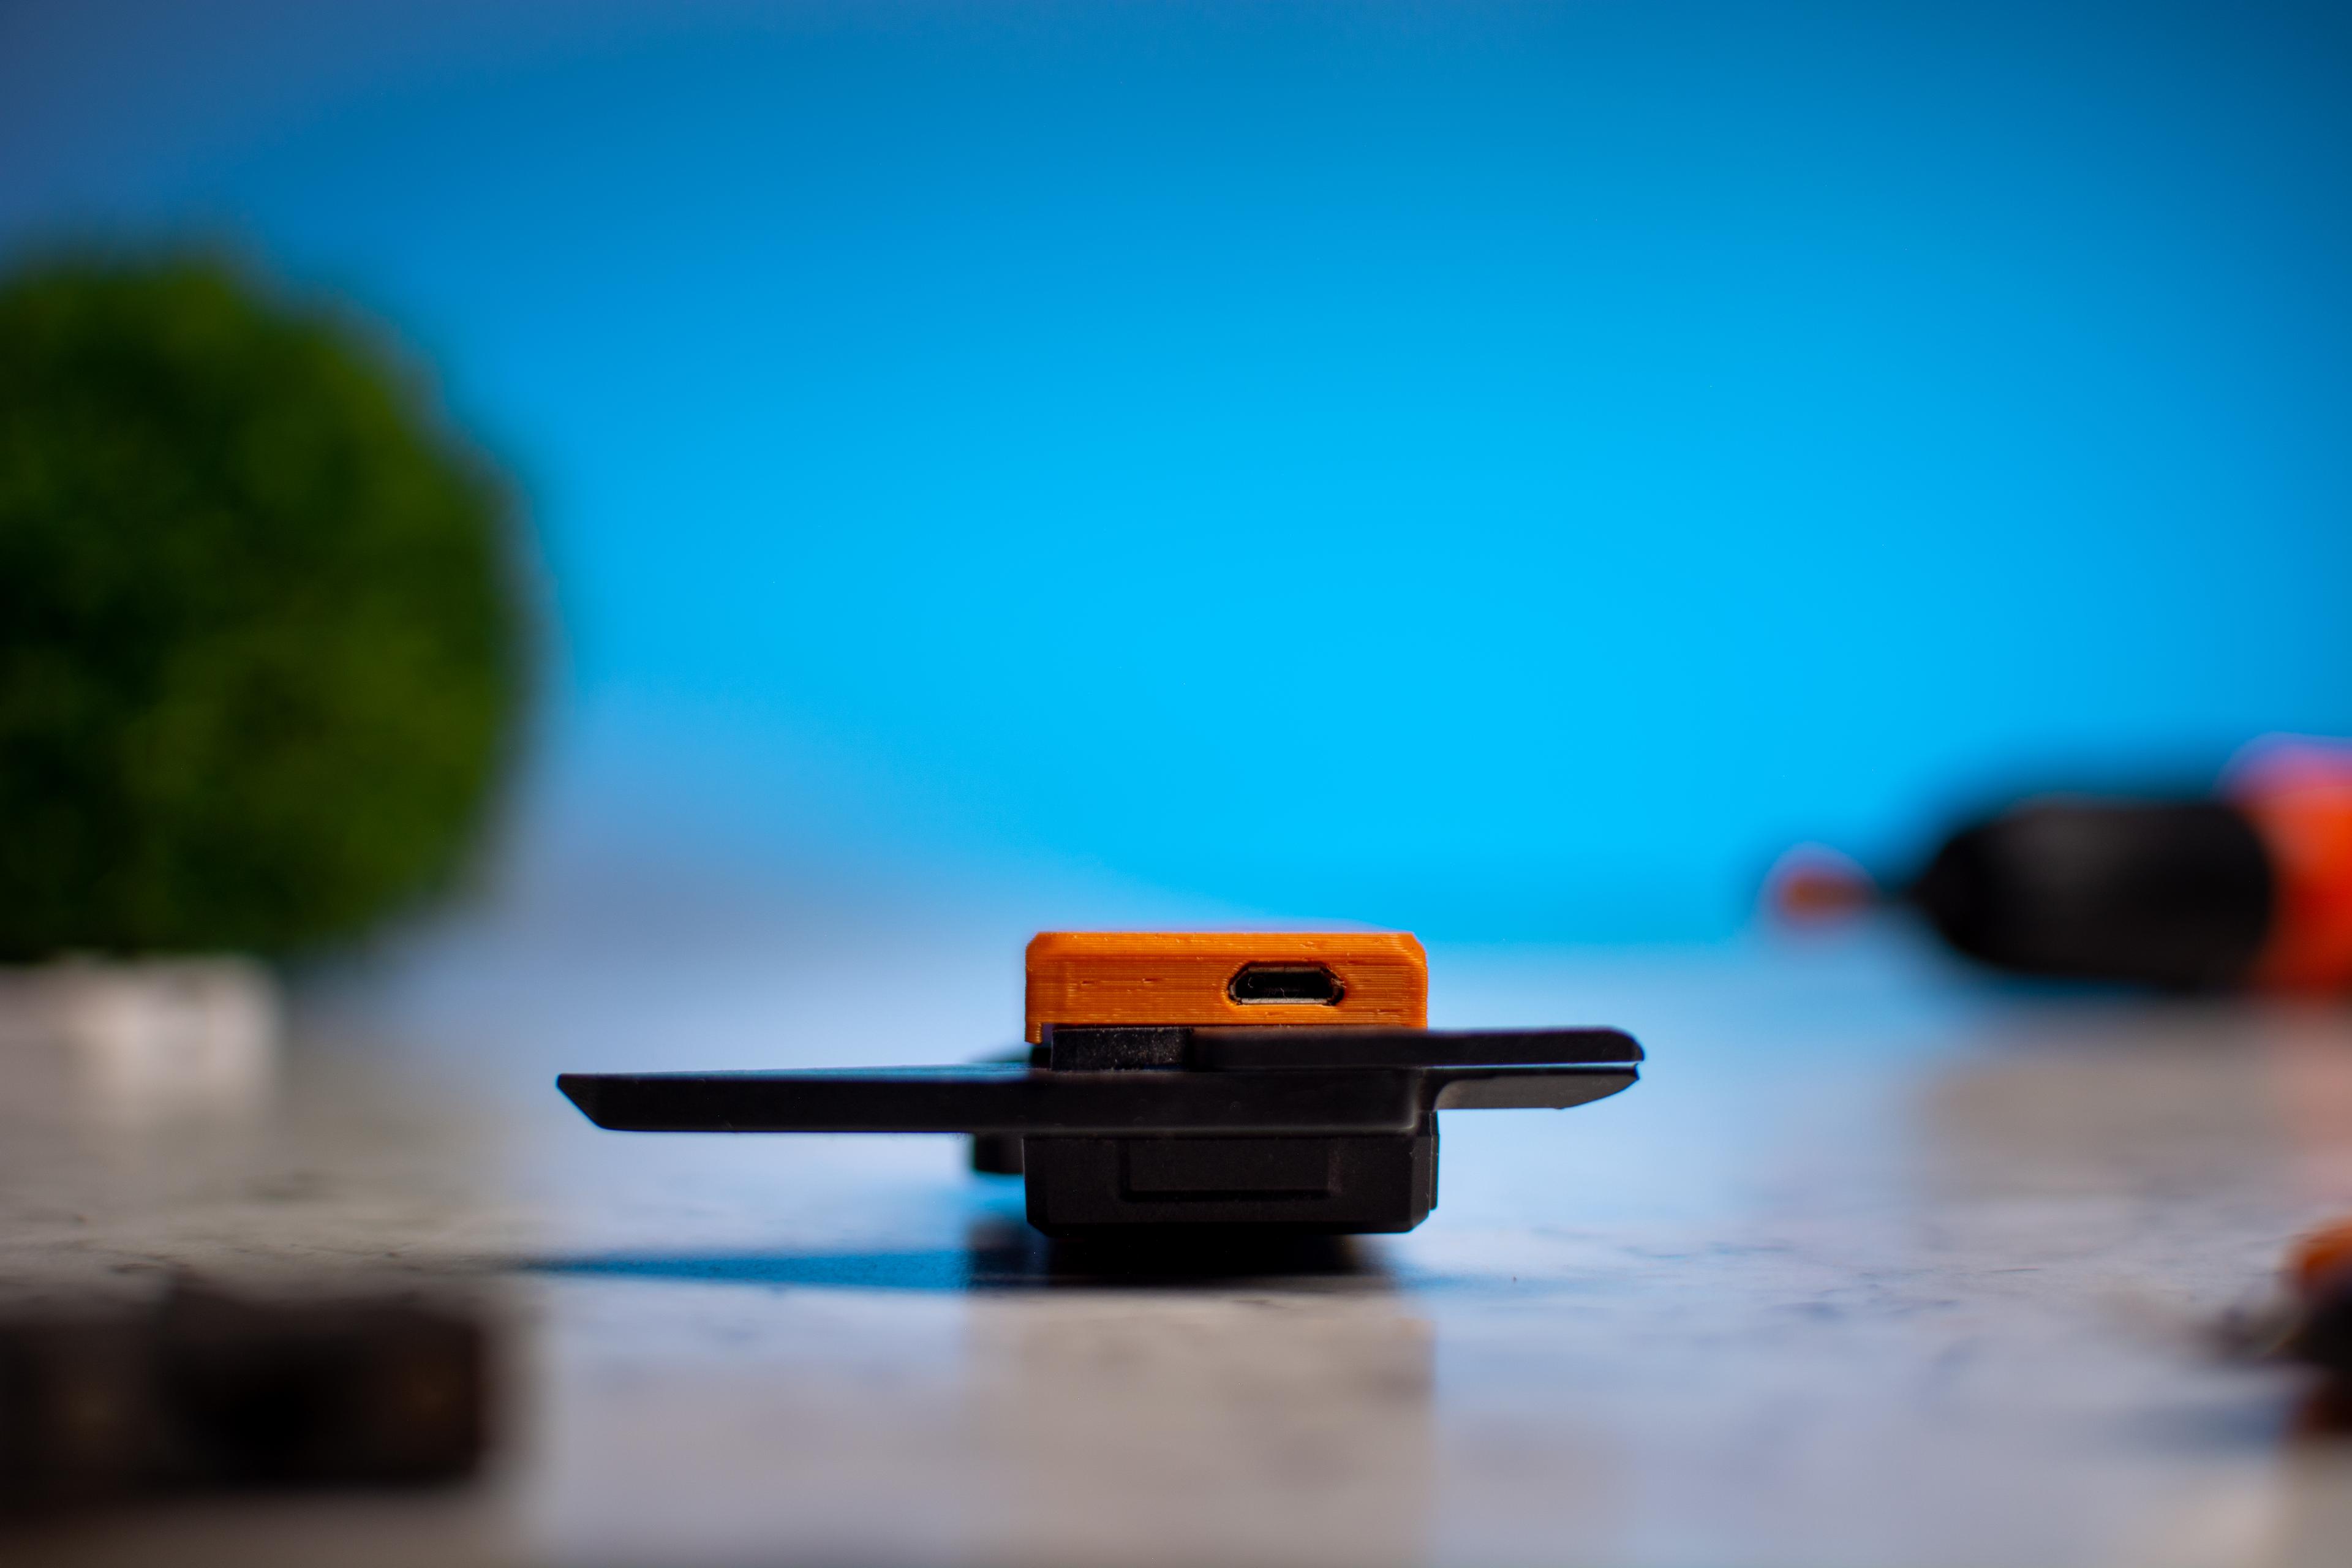 Digital caliper battery mod 3d model